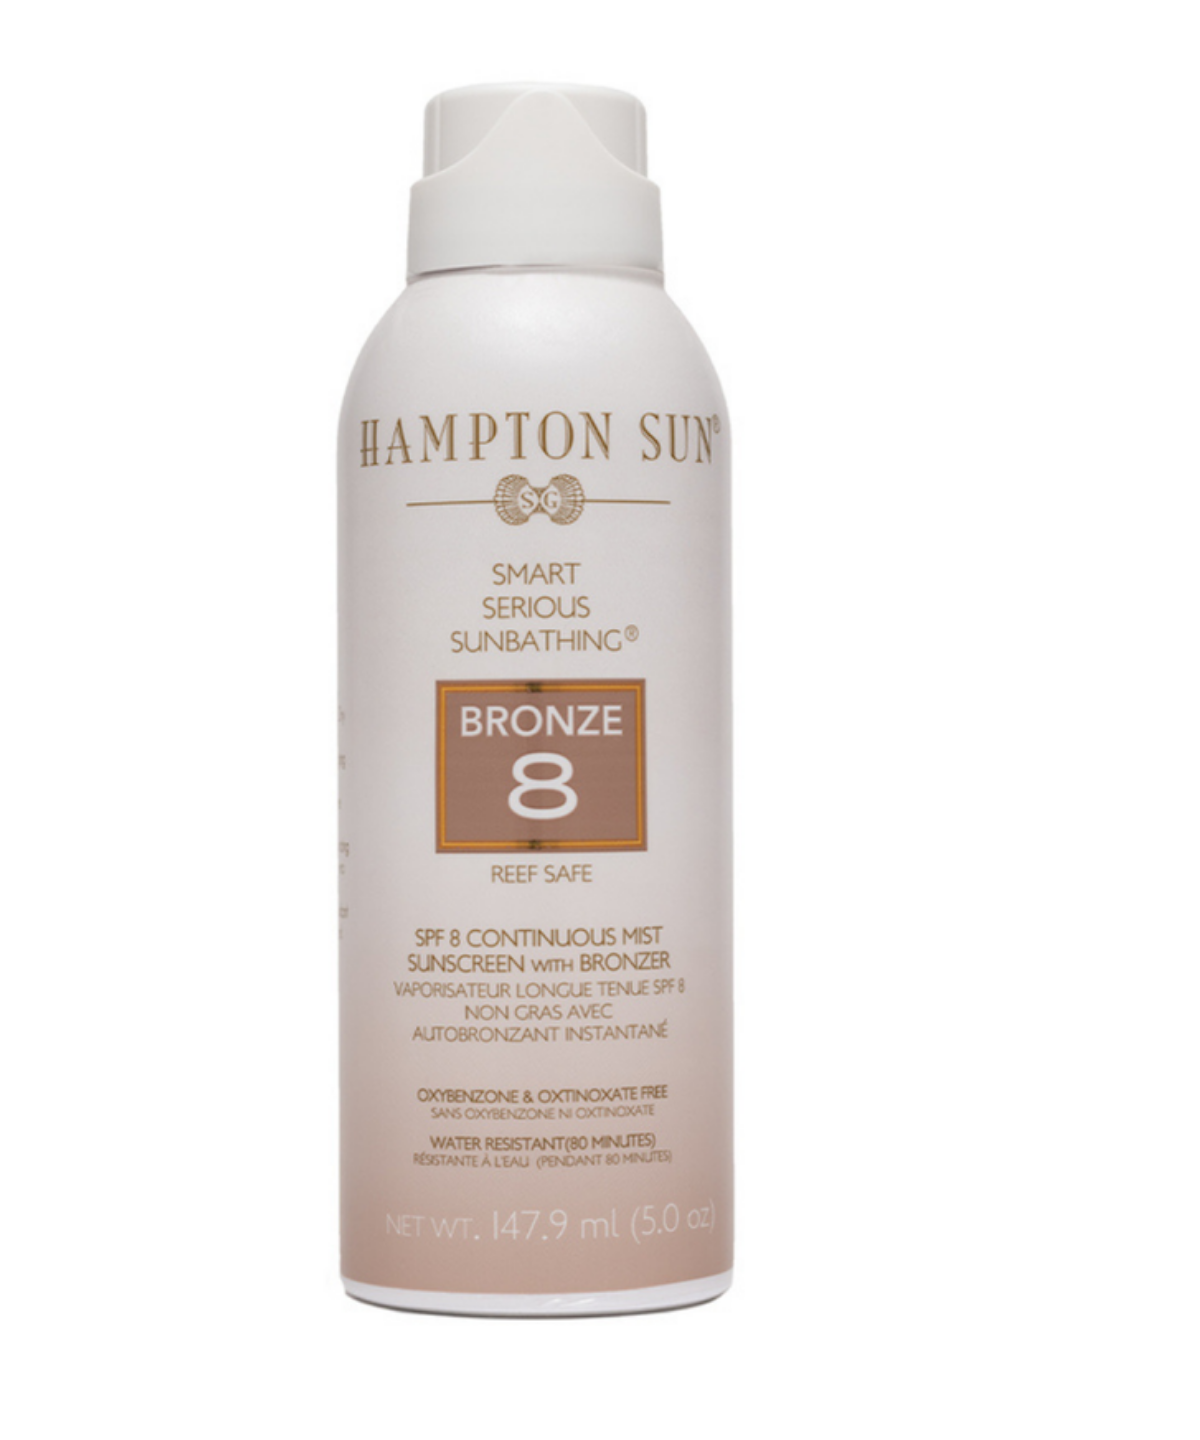 Hamptons Sun - SPF 8 Bronze Continuous Mist